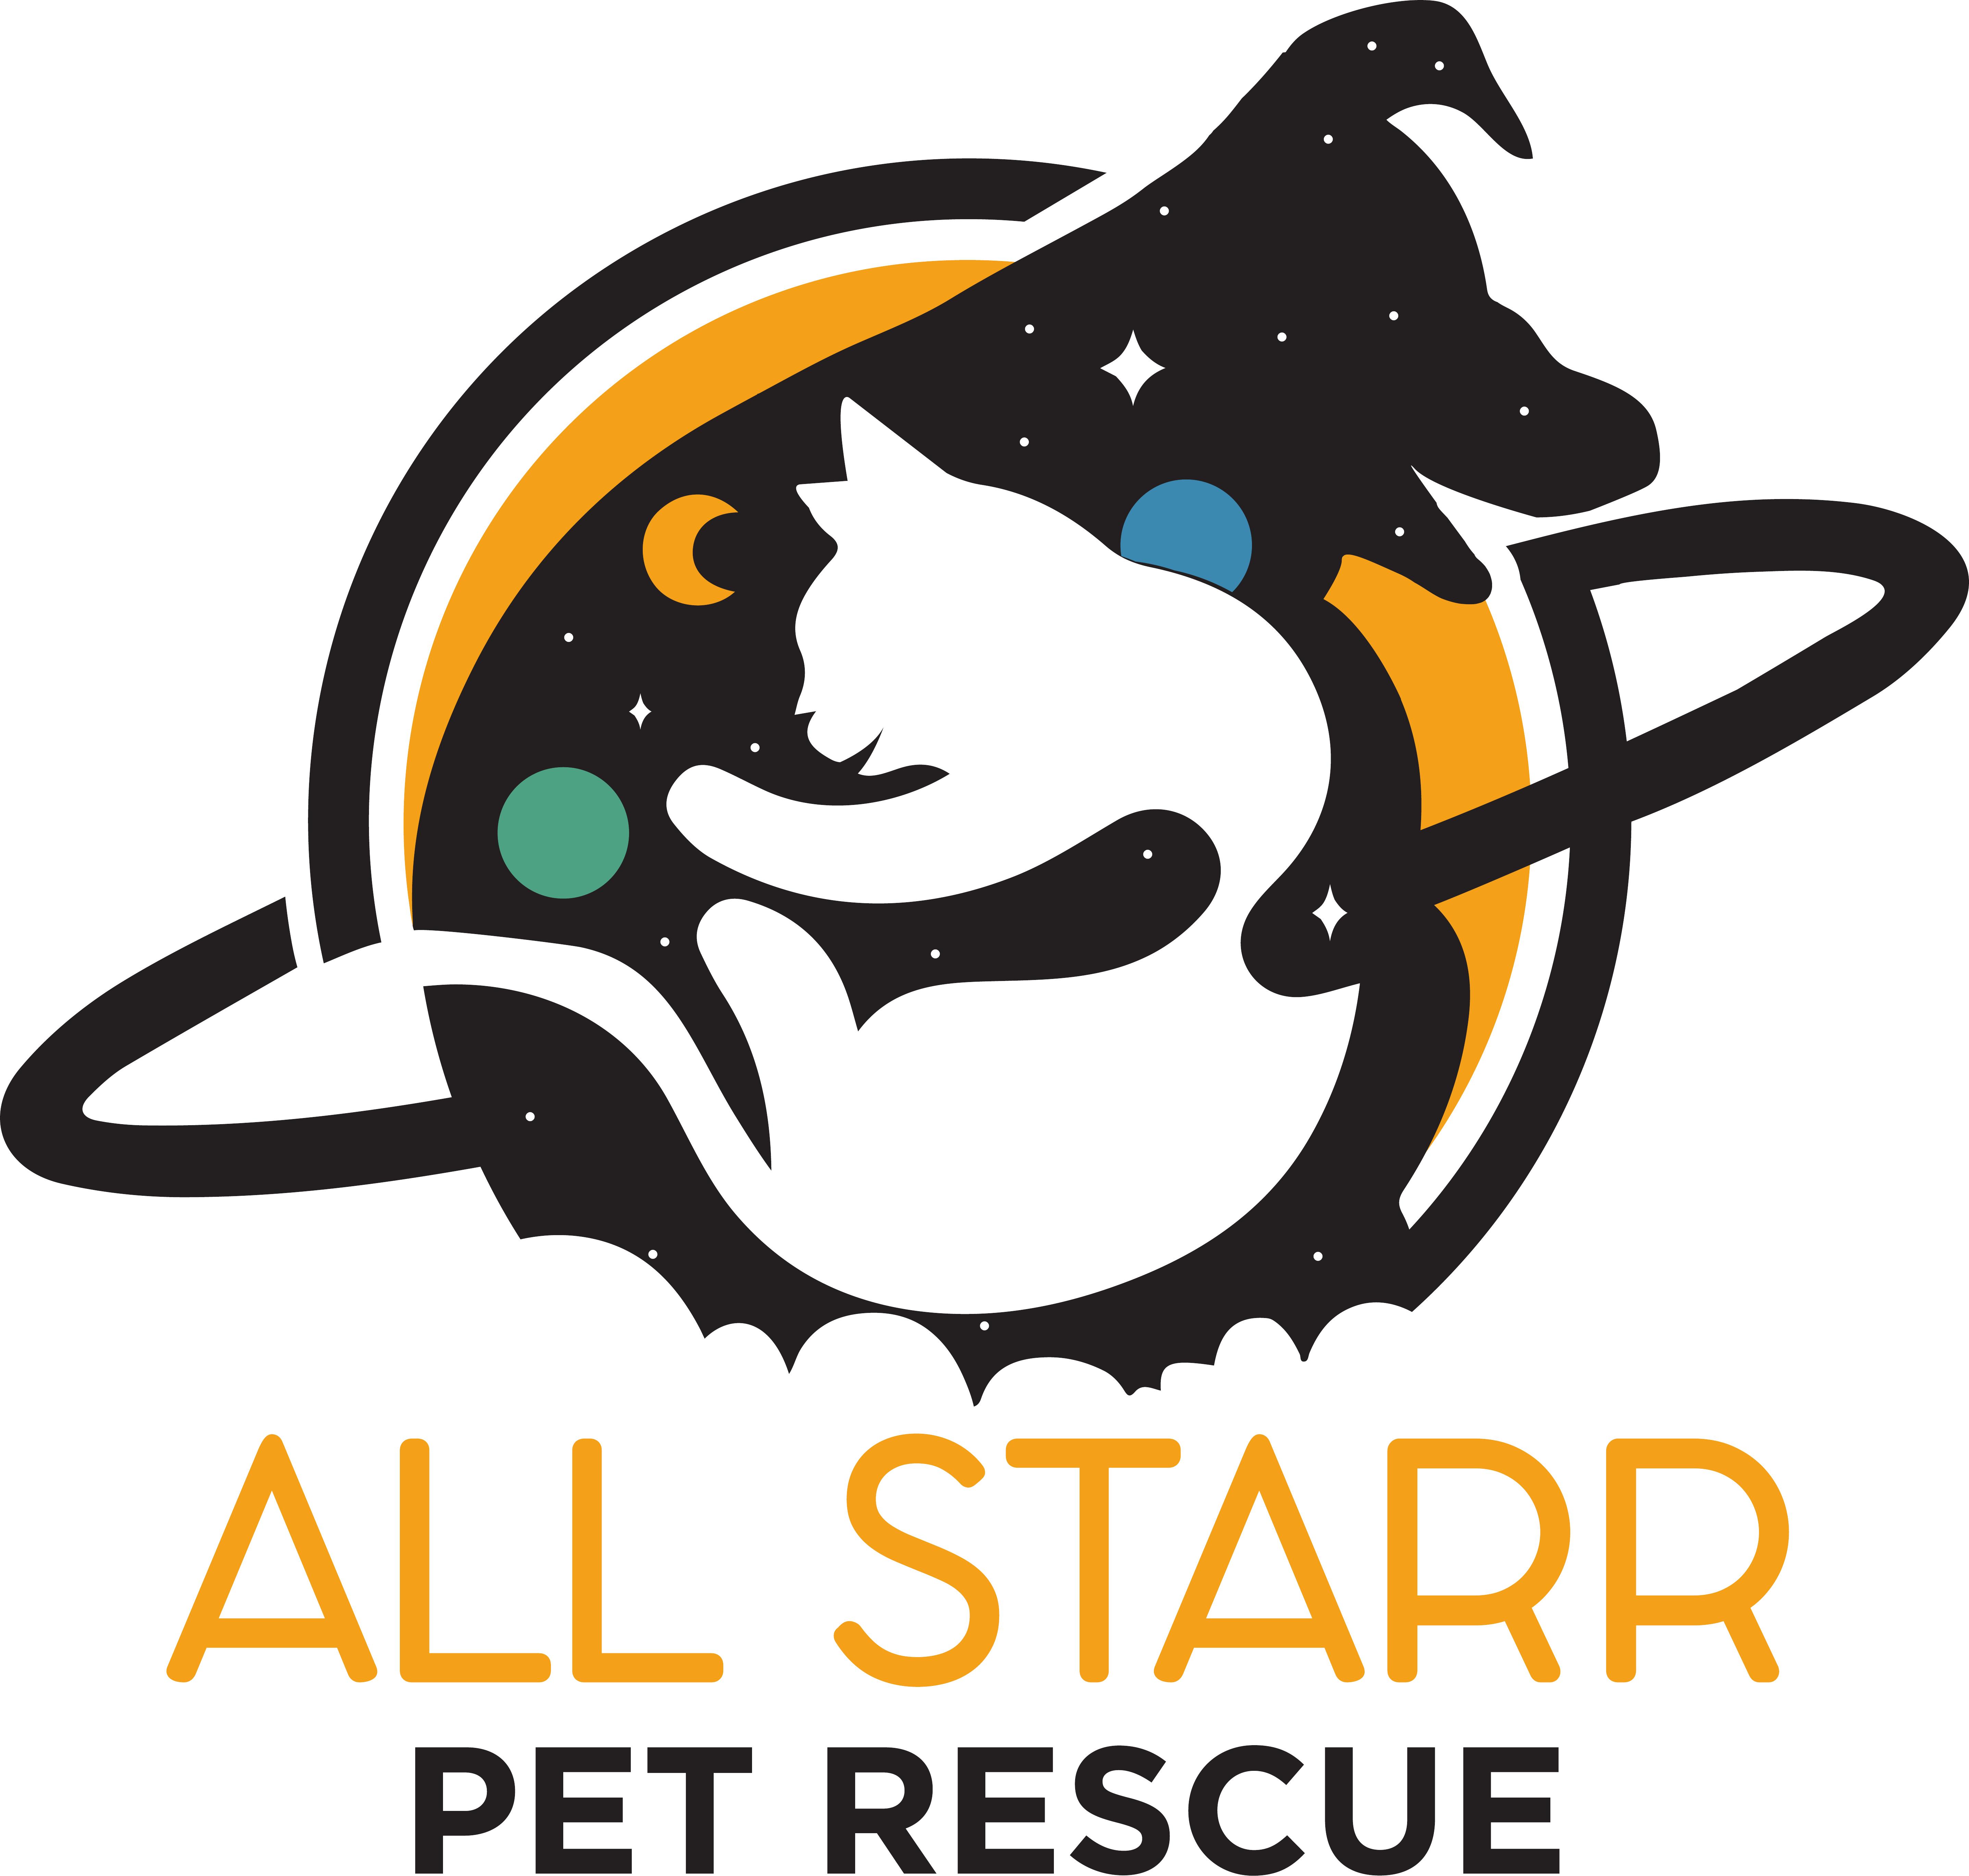 All Starr Pet Rescue